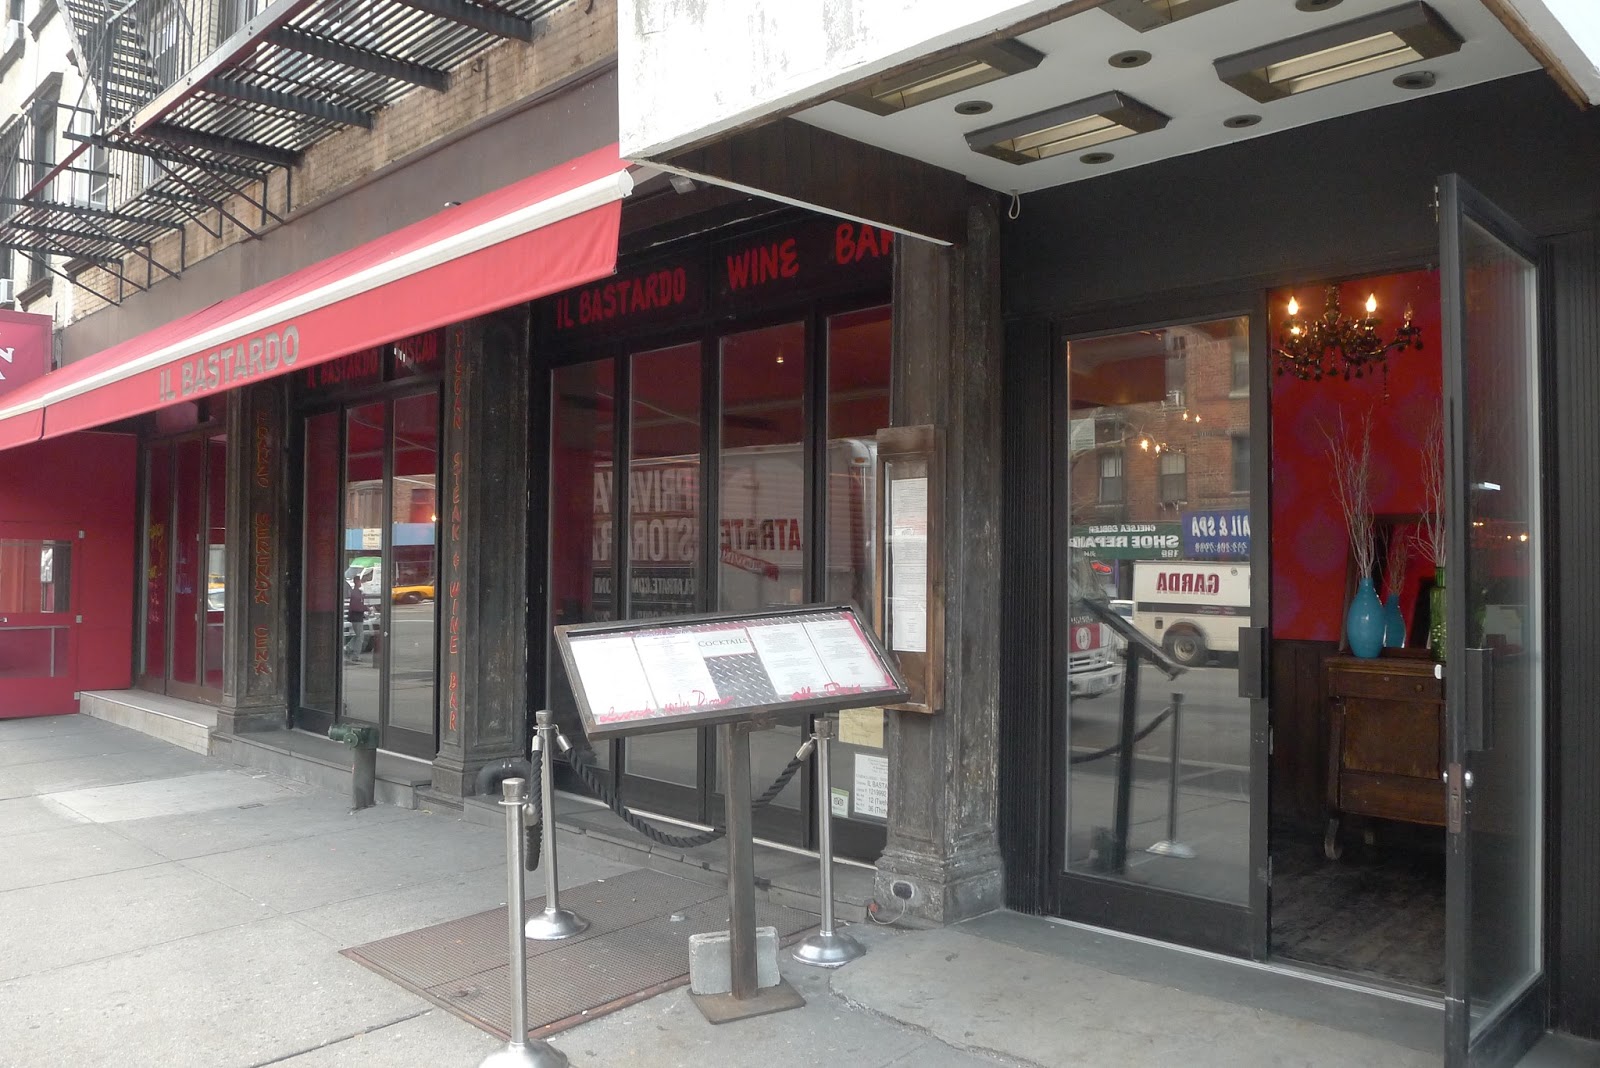 Photo of IL Bastardo in New York City, New York, United States - 1 Picture of Restaurant, Food, Point of interest, Establishment, Bar